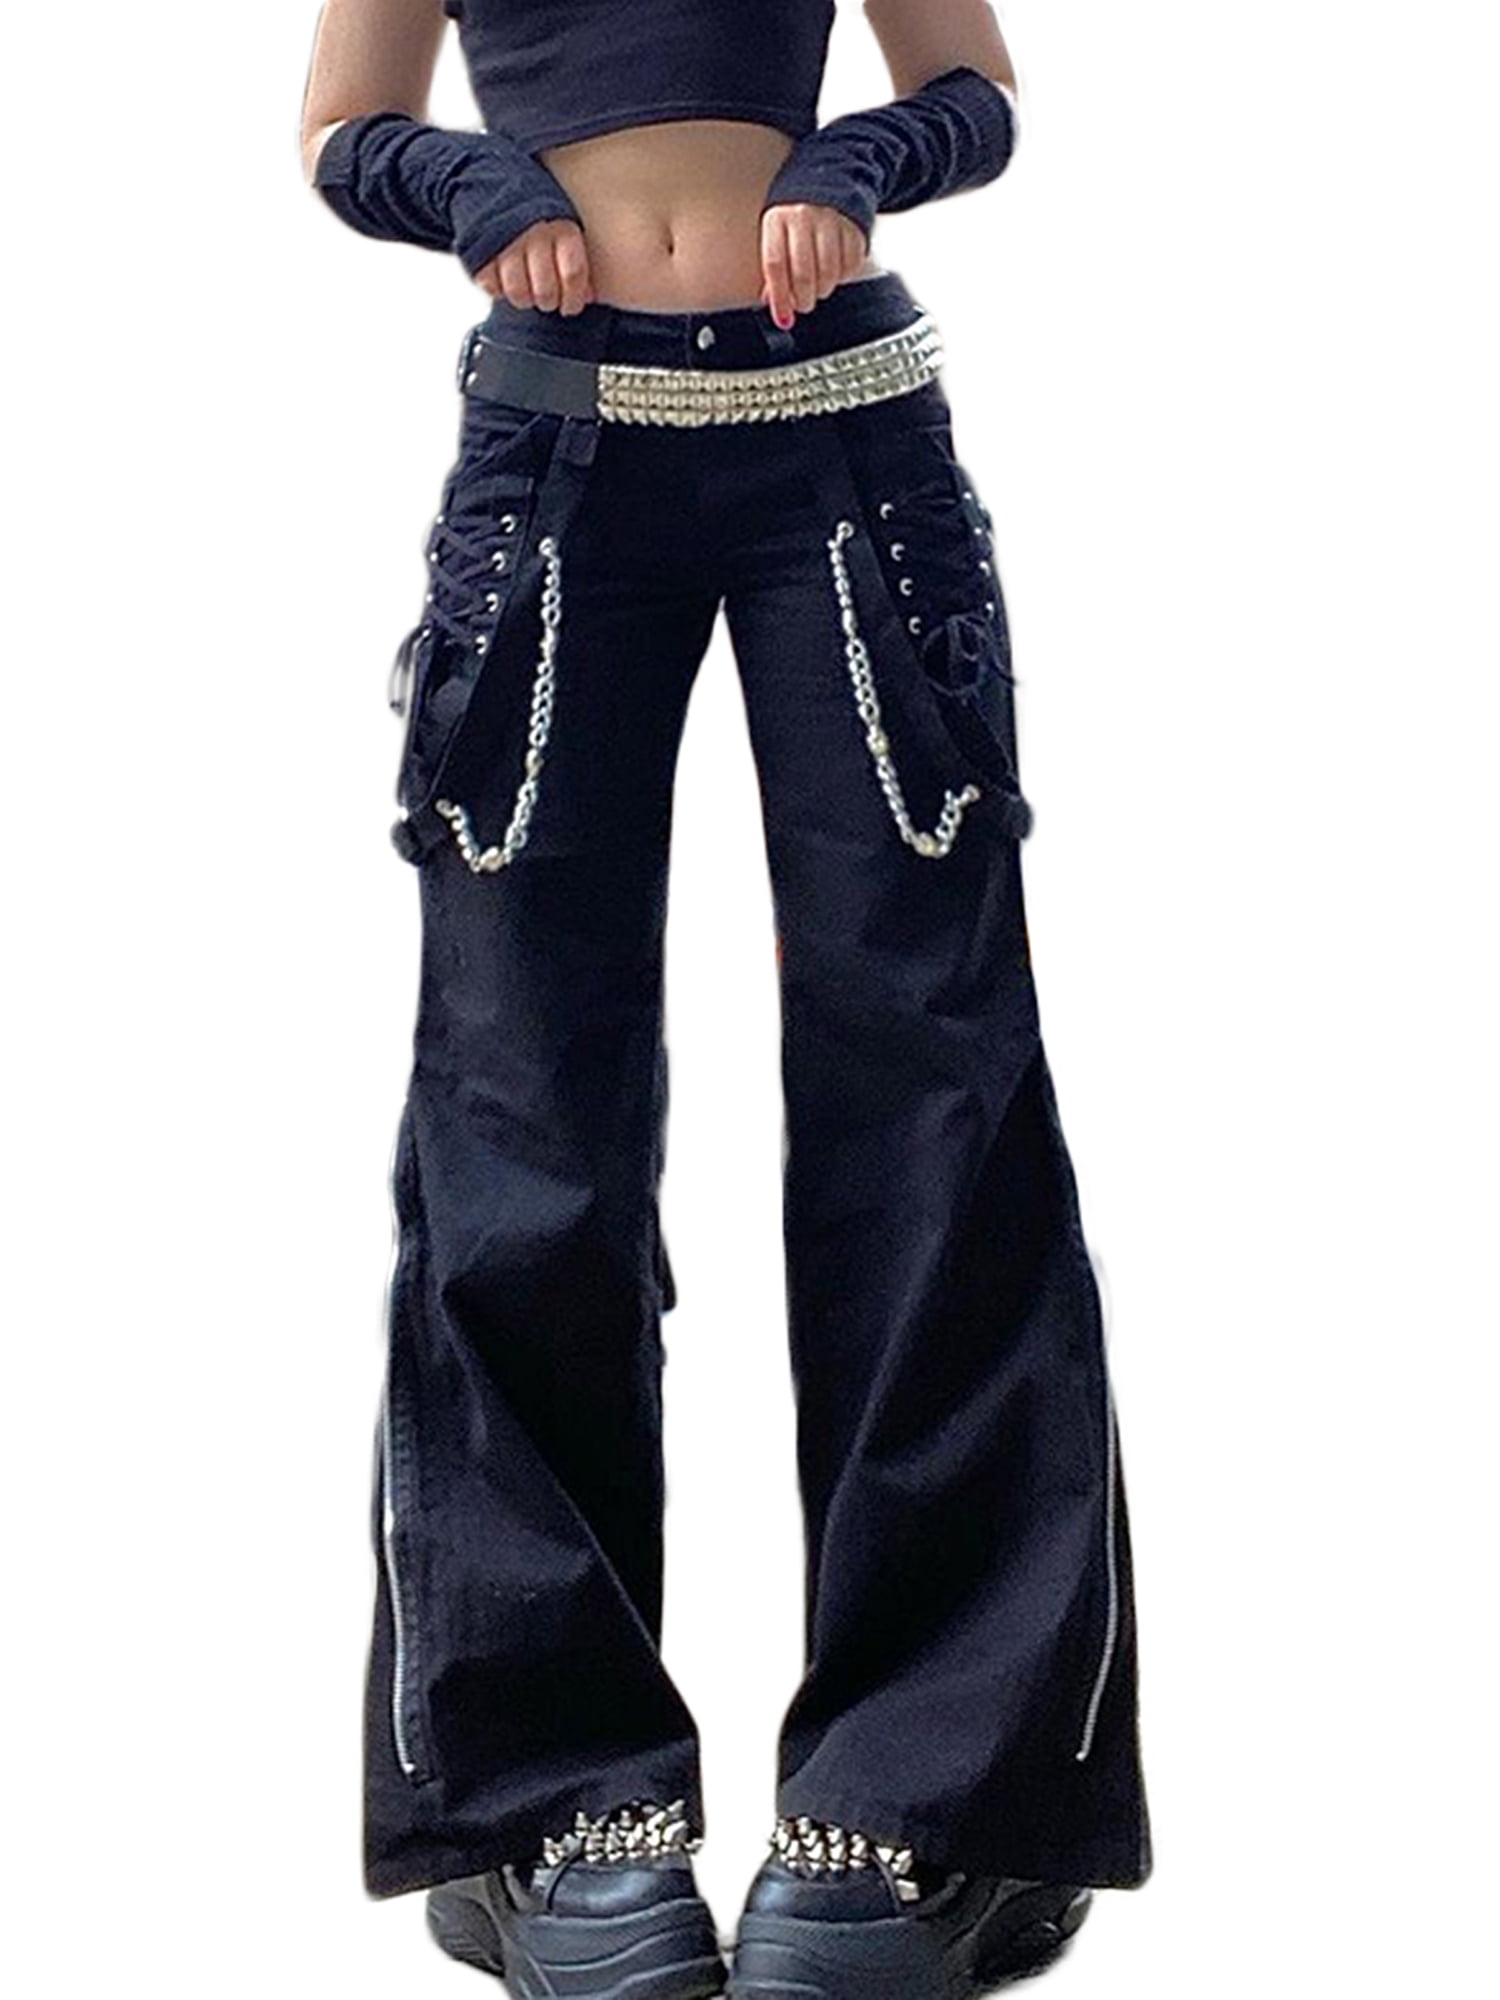 Black Chain Flare Pants Women Trousers Korean Fashion Casual Office Lady  Split High Waist Long Bell Bottom Pants Y2k Clothes - Pants & Capris -  AliExpress